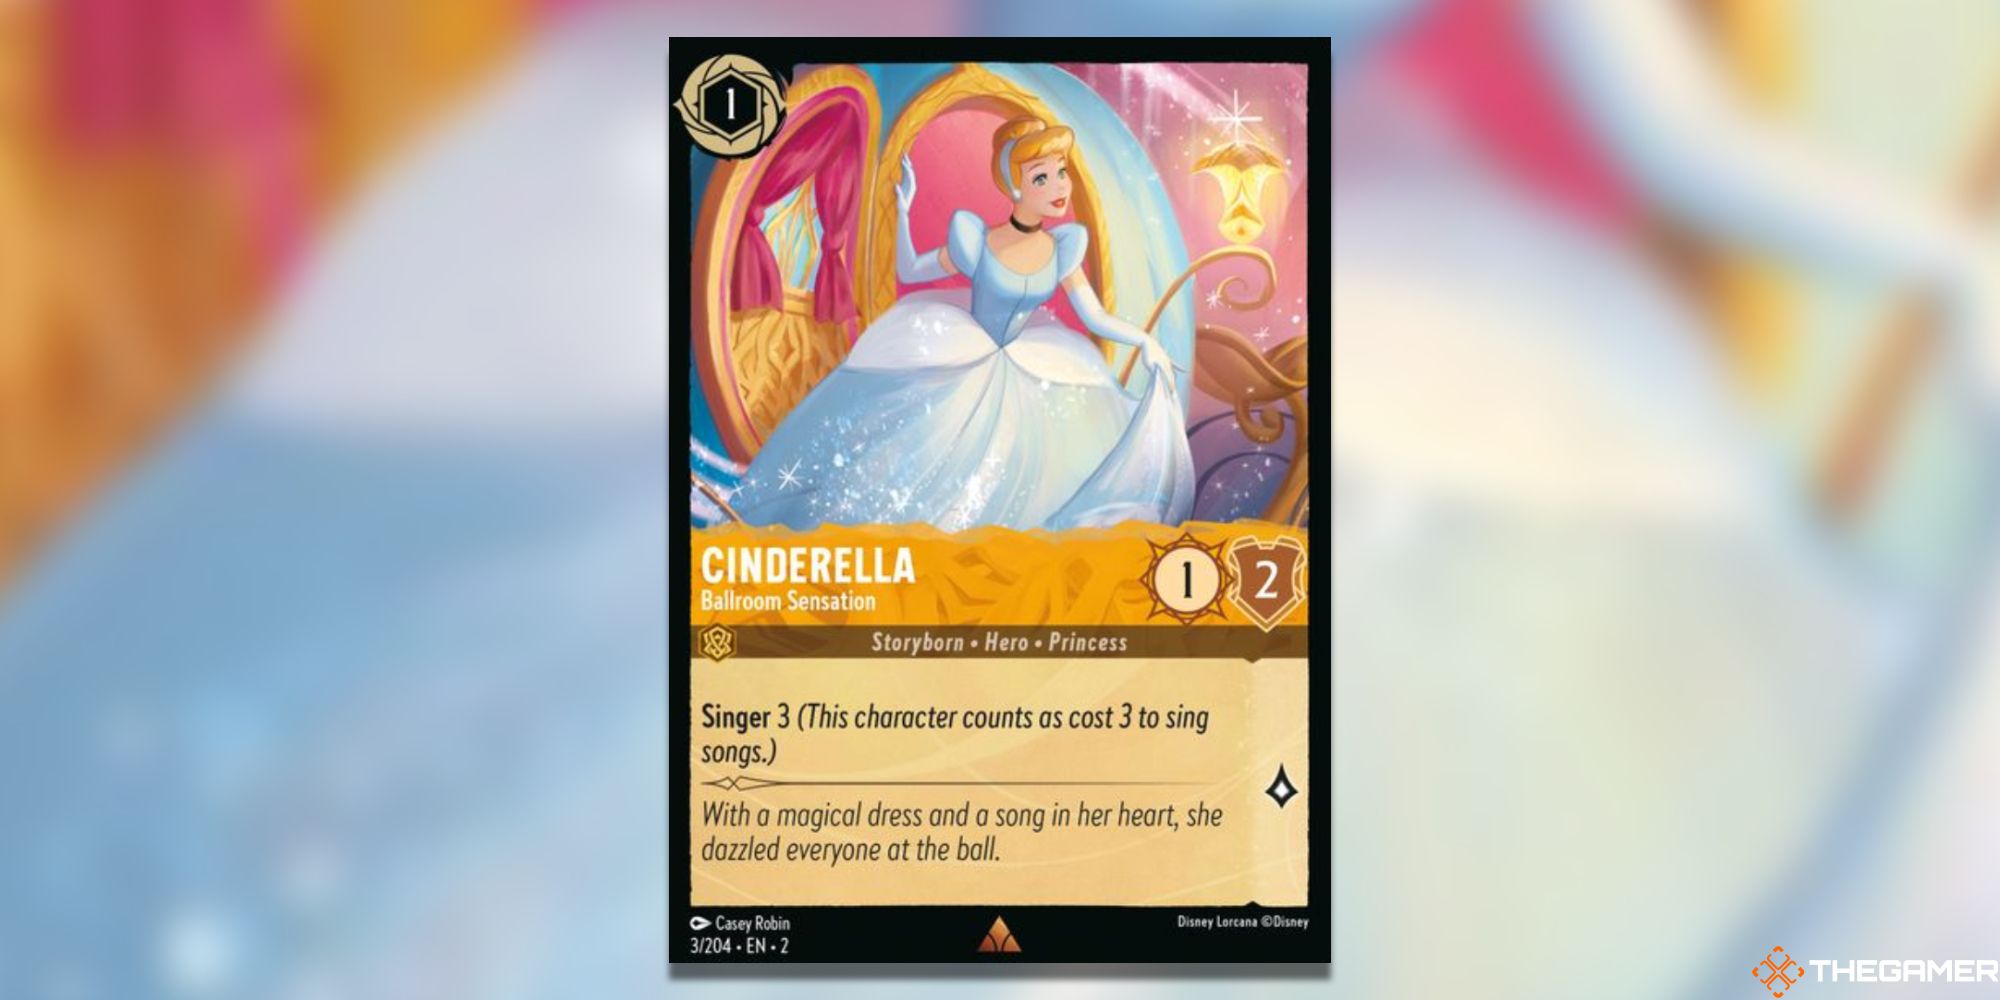 Cinderella, Ballroom Sensation Card